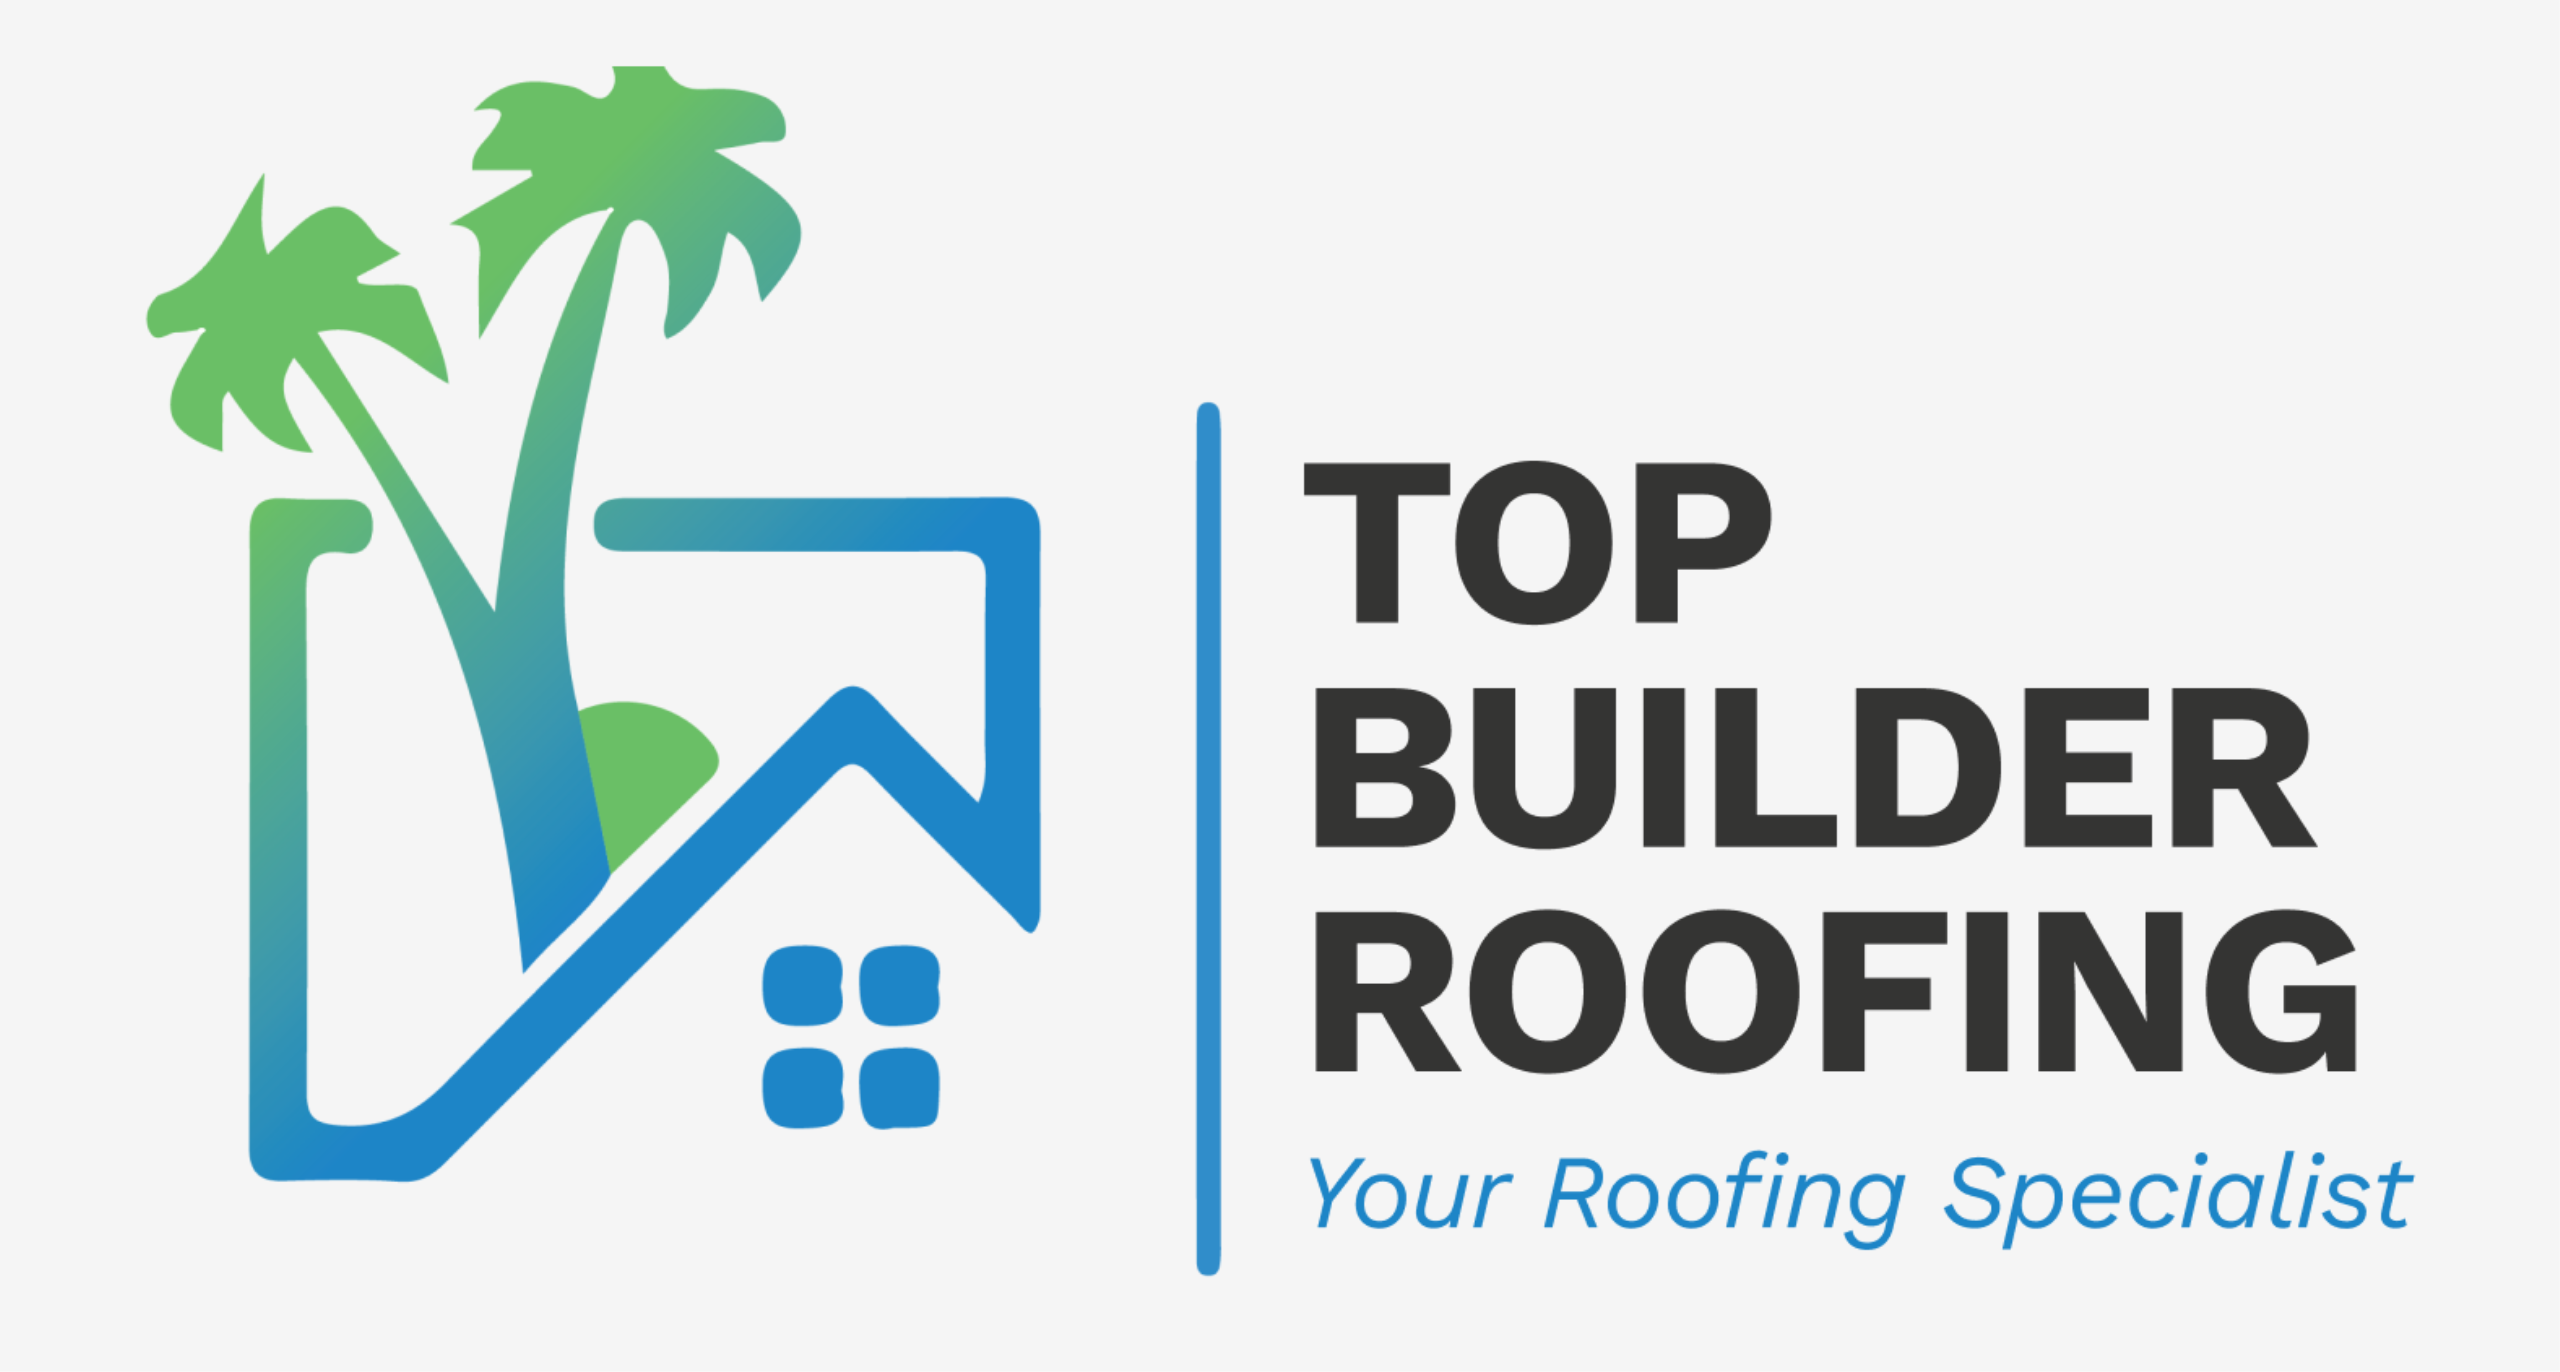 Top Builder Roofing LLC Logo